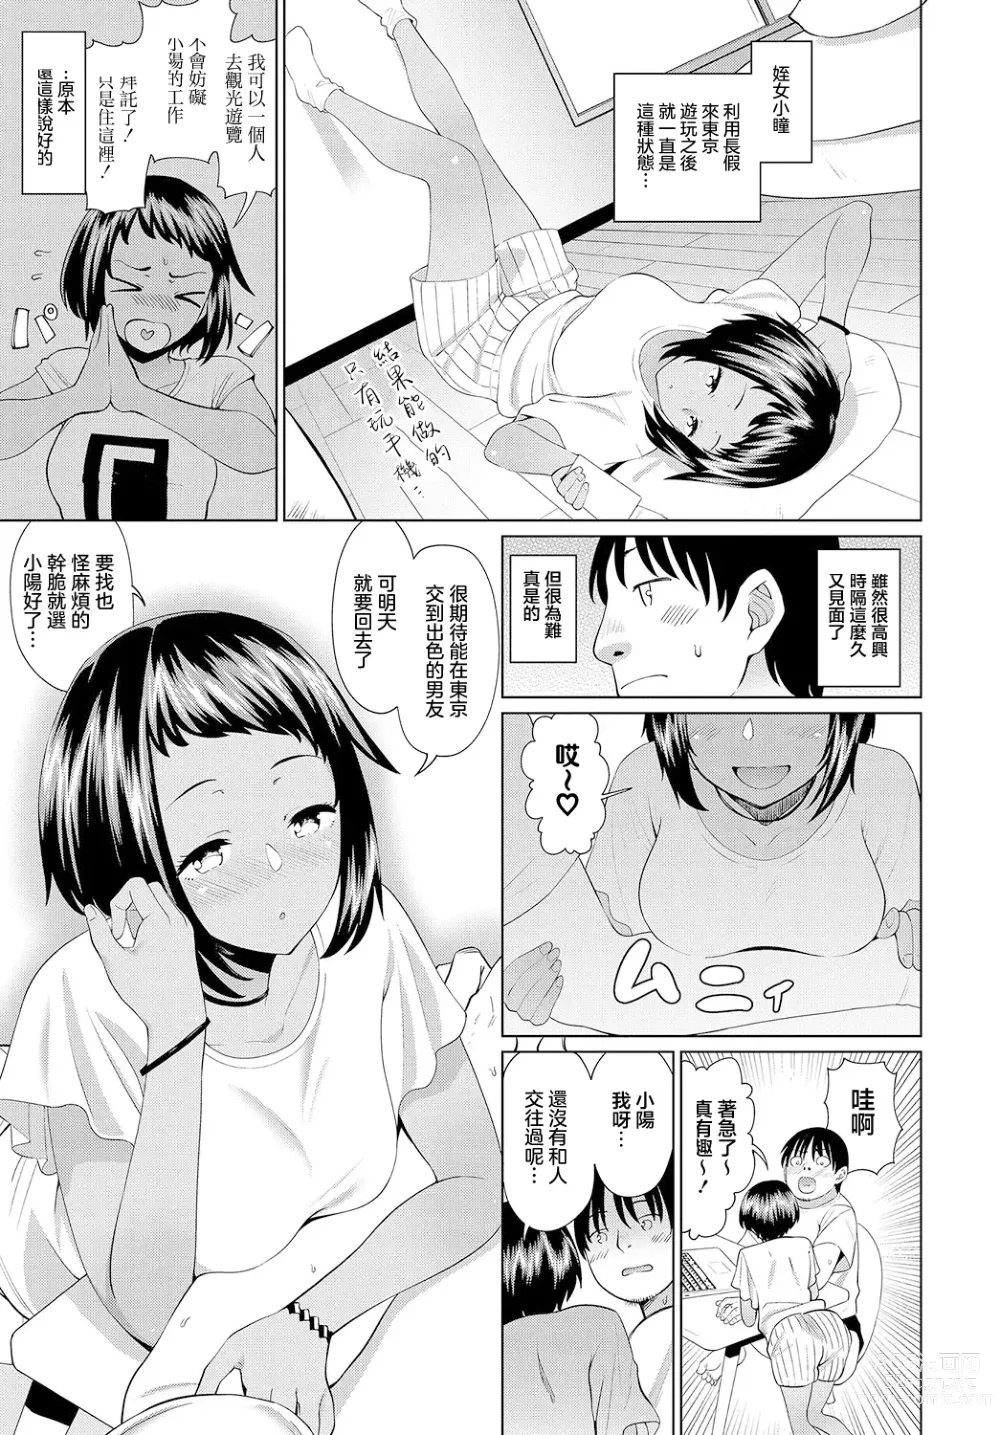 Page 3 of manga Mei no Natsuyasumi